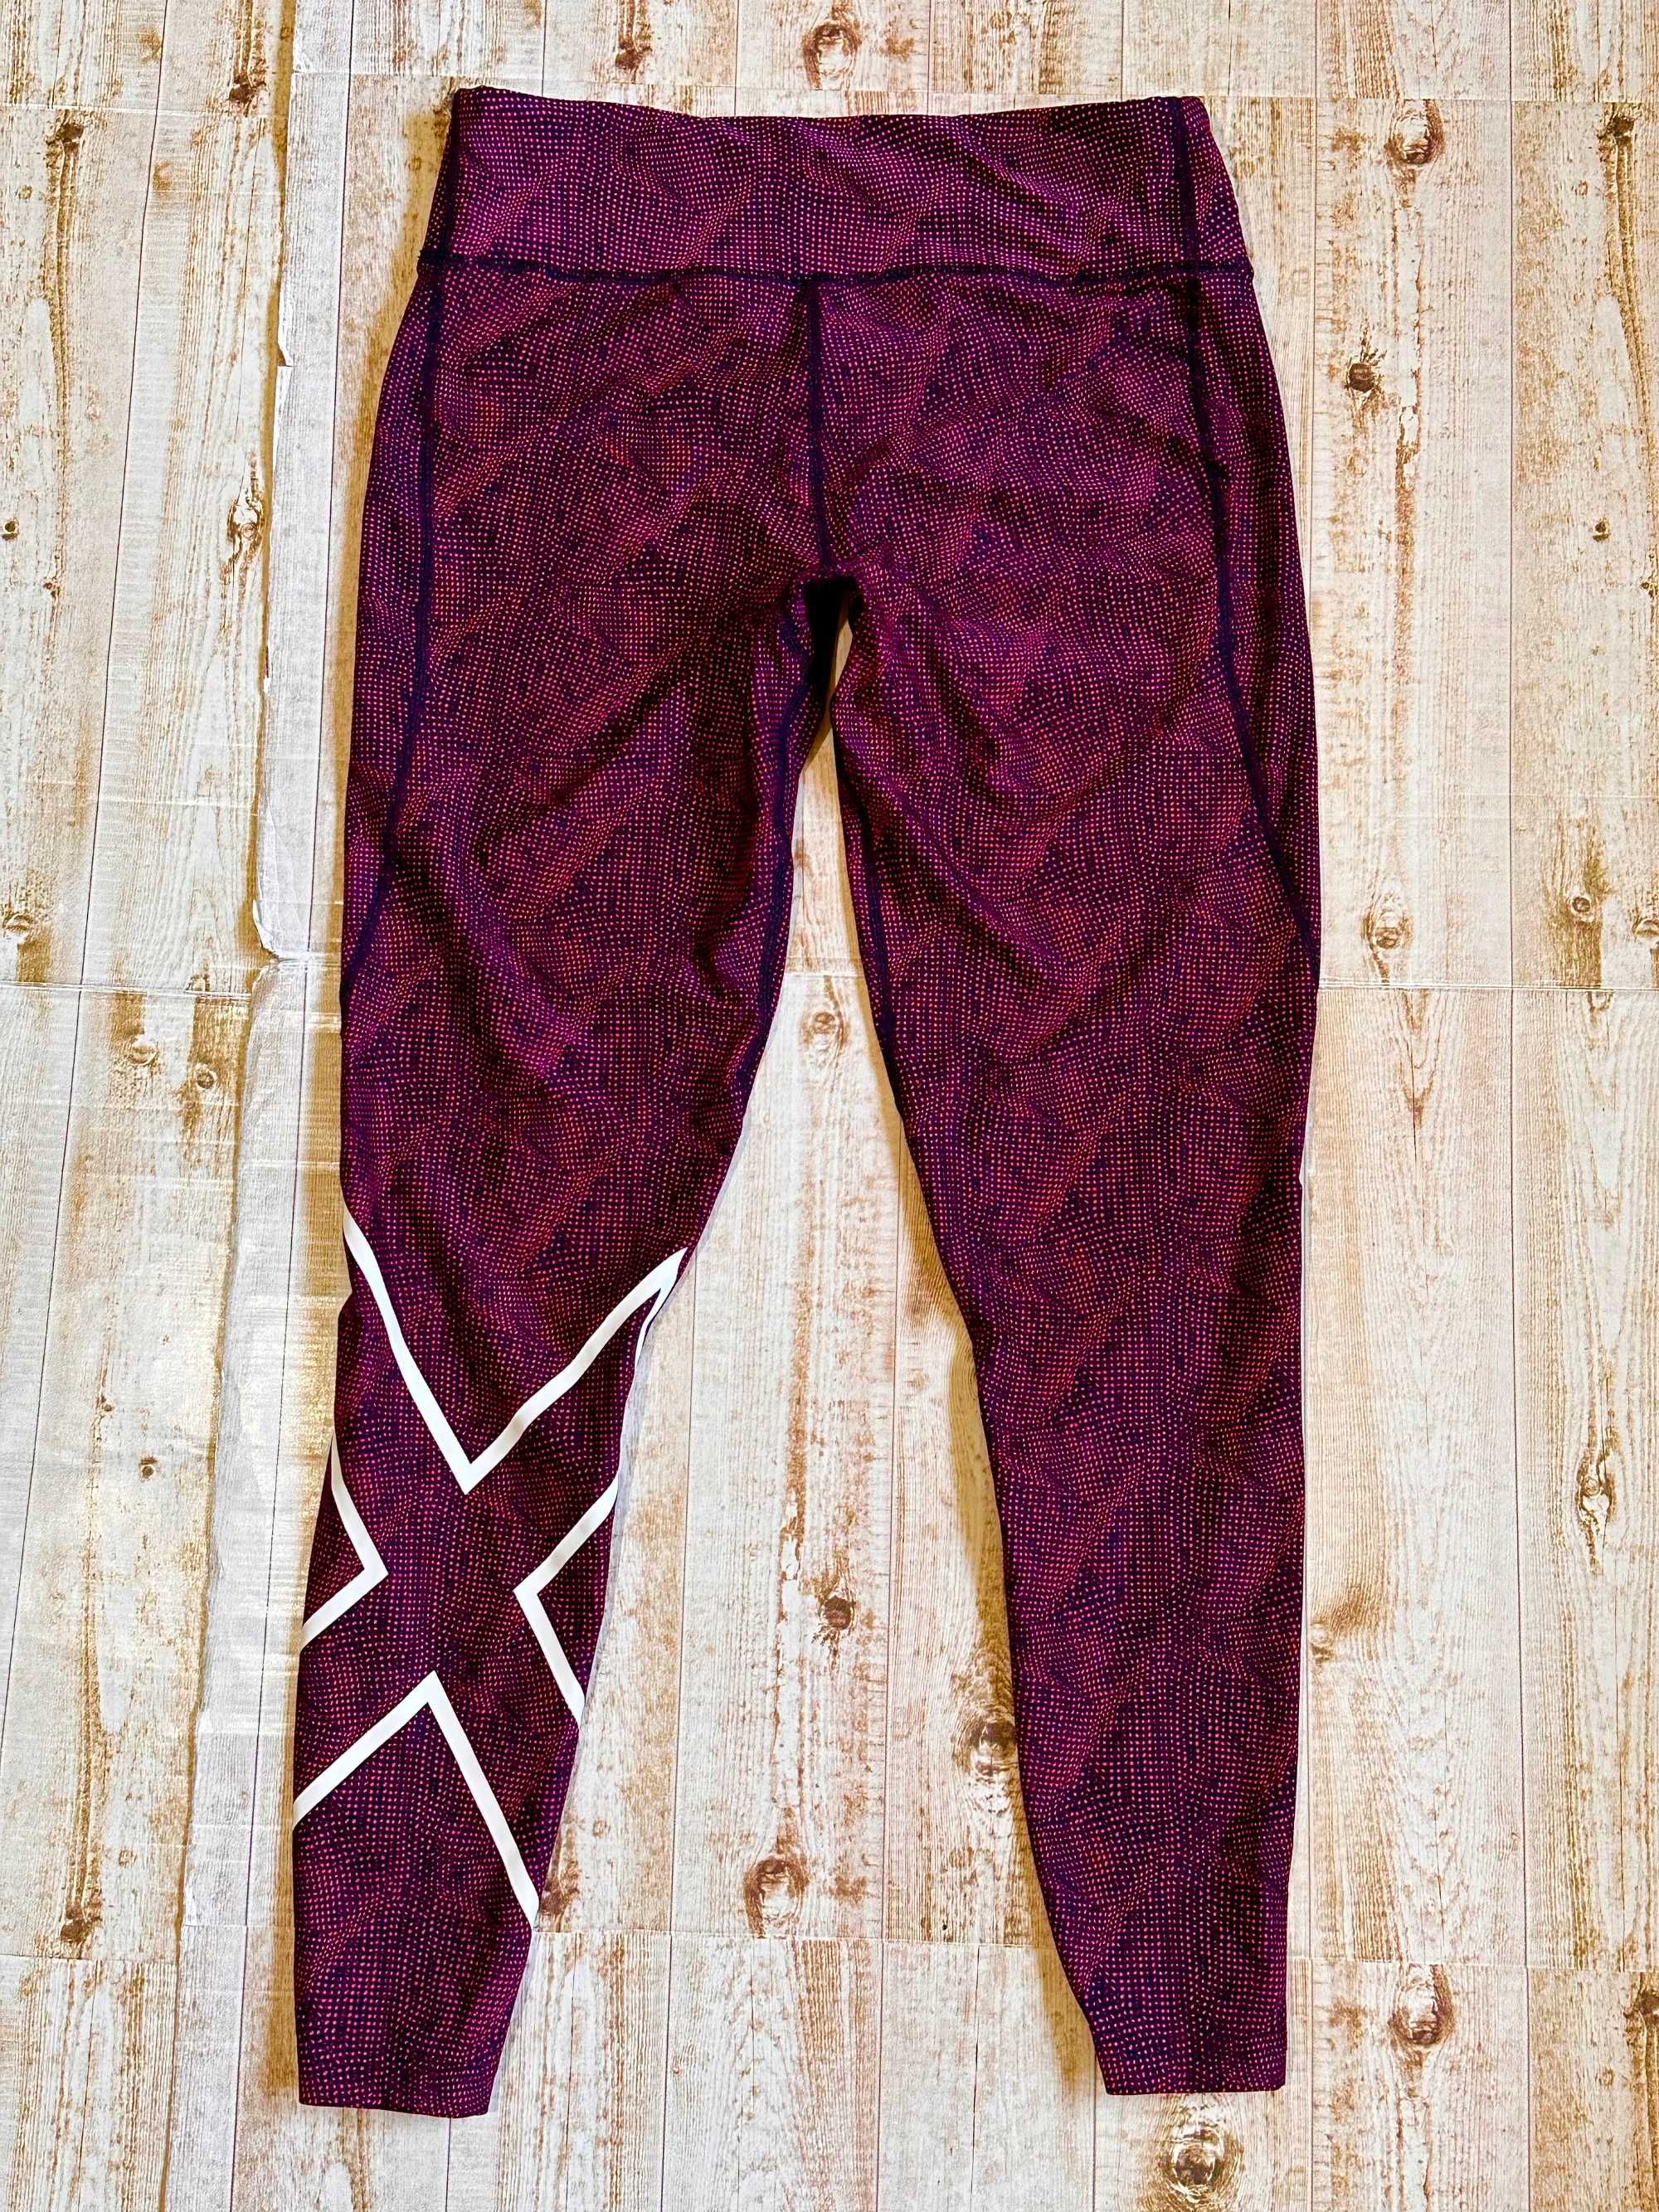 2XU damskie legginsy kompresyjne getry spodnie na siłownię biegania M